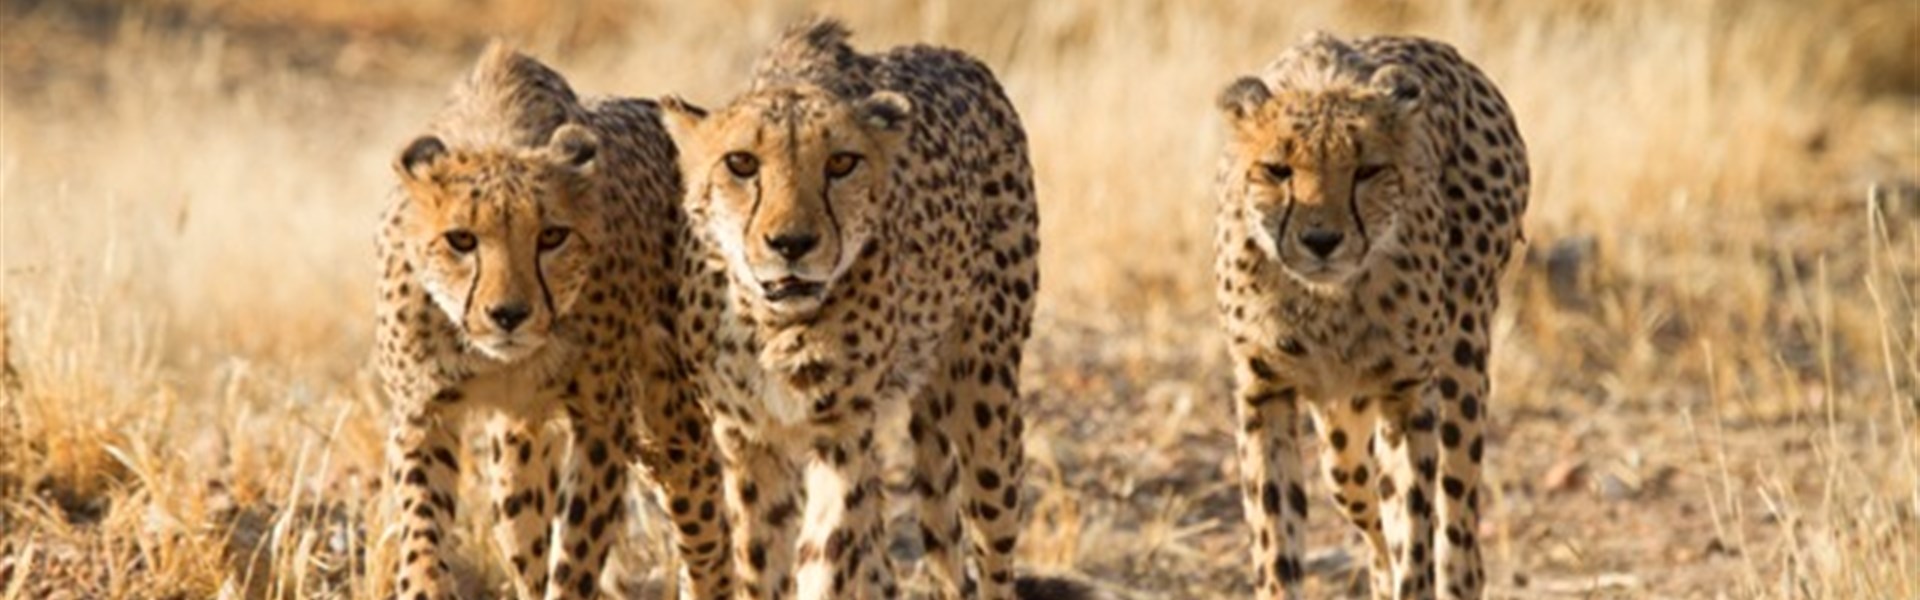 Divoká Namibie a safari v NP Etosha (expedičním náklaďákem s českým průvodcem) - Gepardí bratři